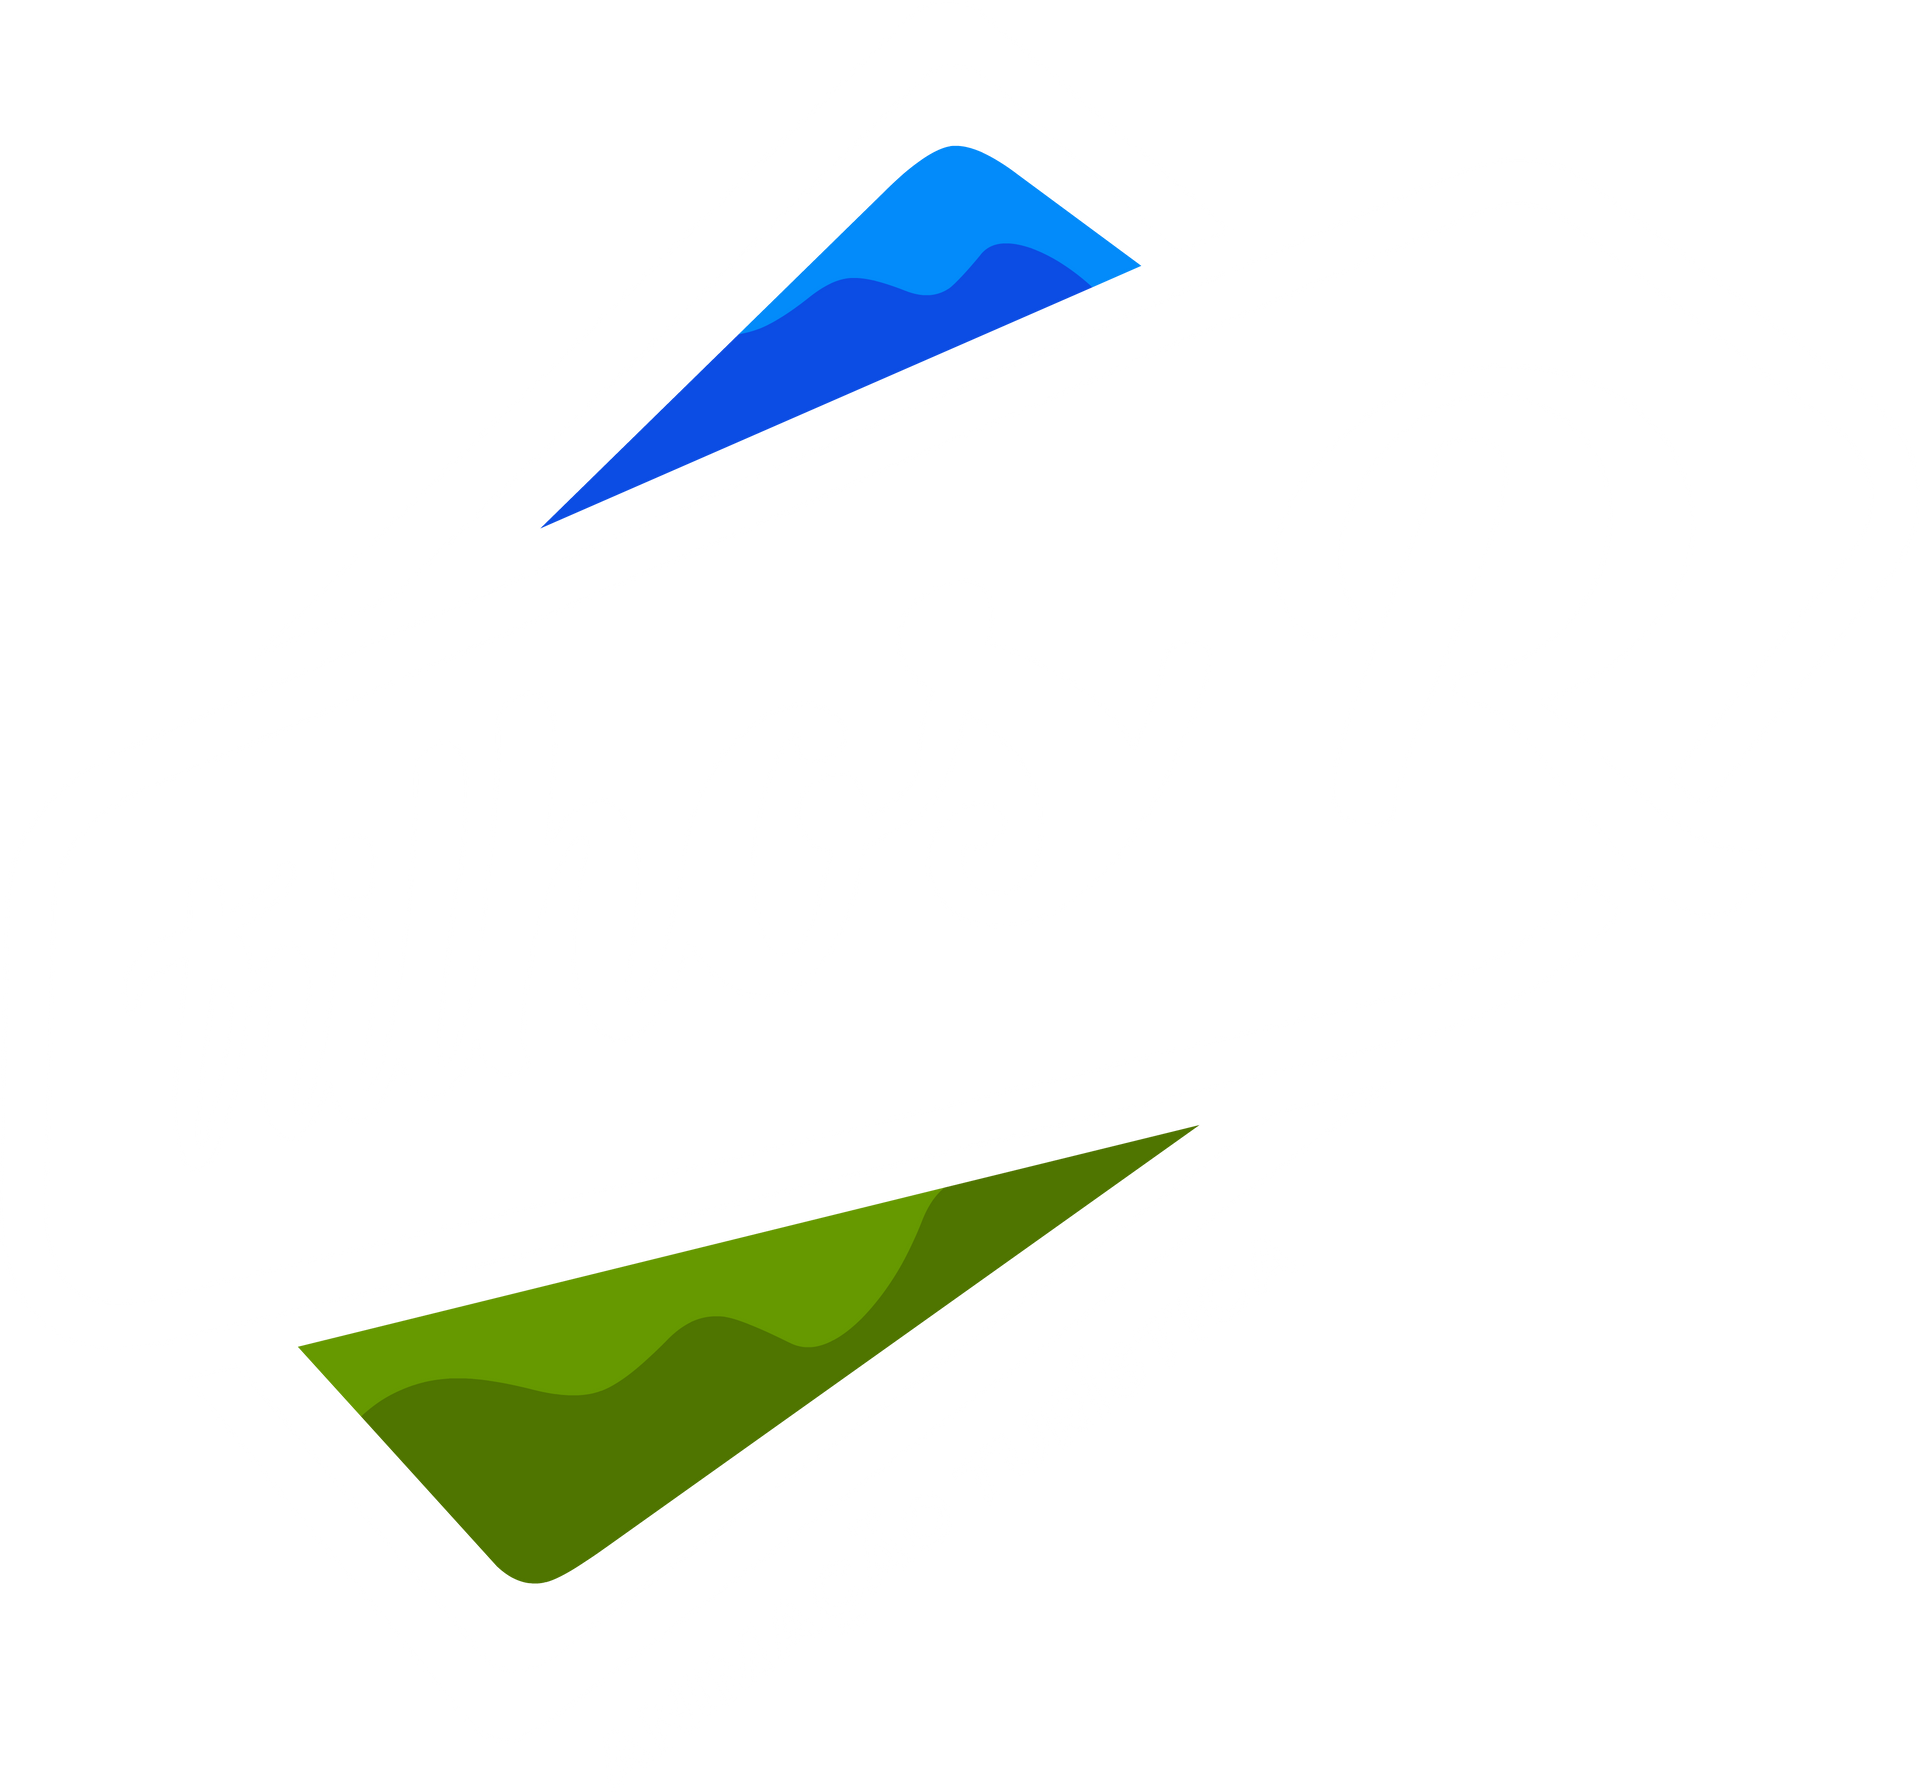 Trilhos R - Azores Tours Logo